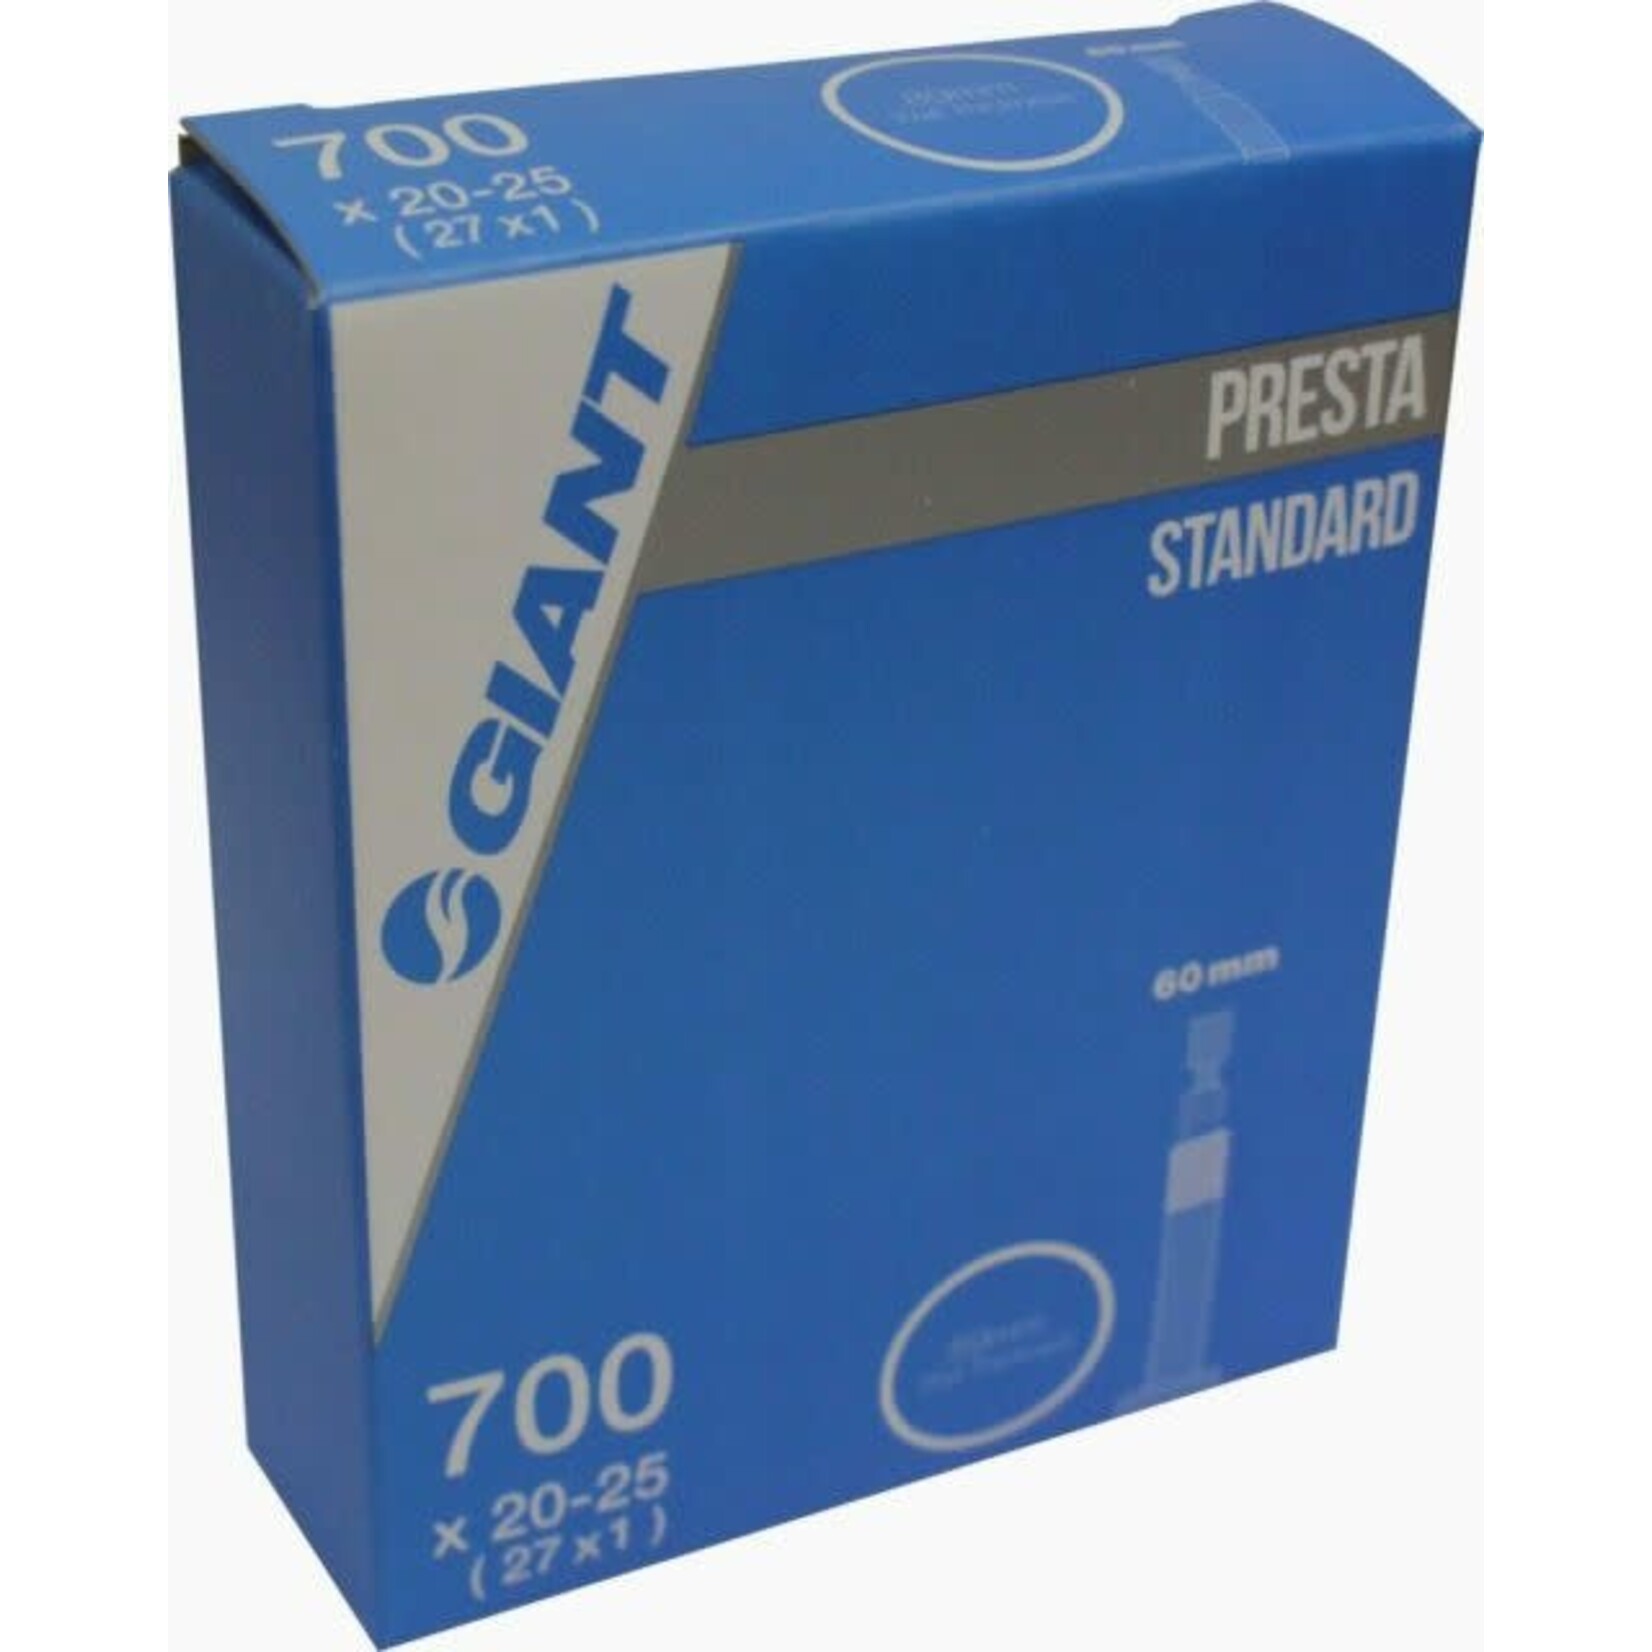 Giant Presta, 700x20 - 25, 60mm Threaded